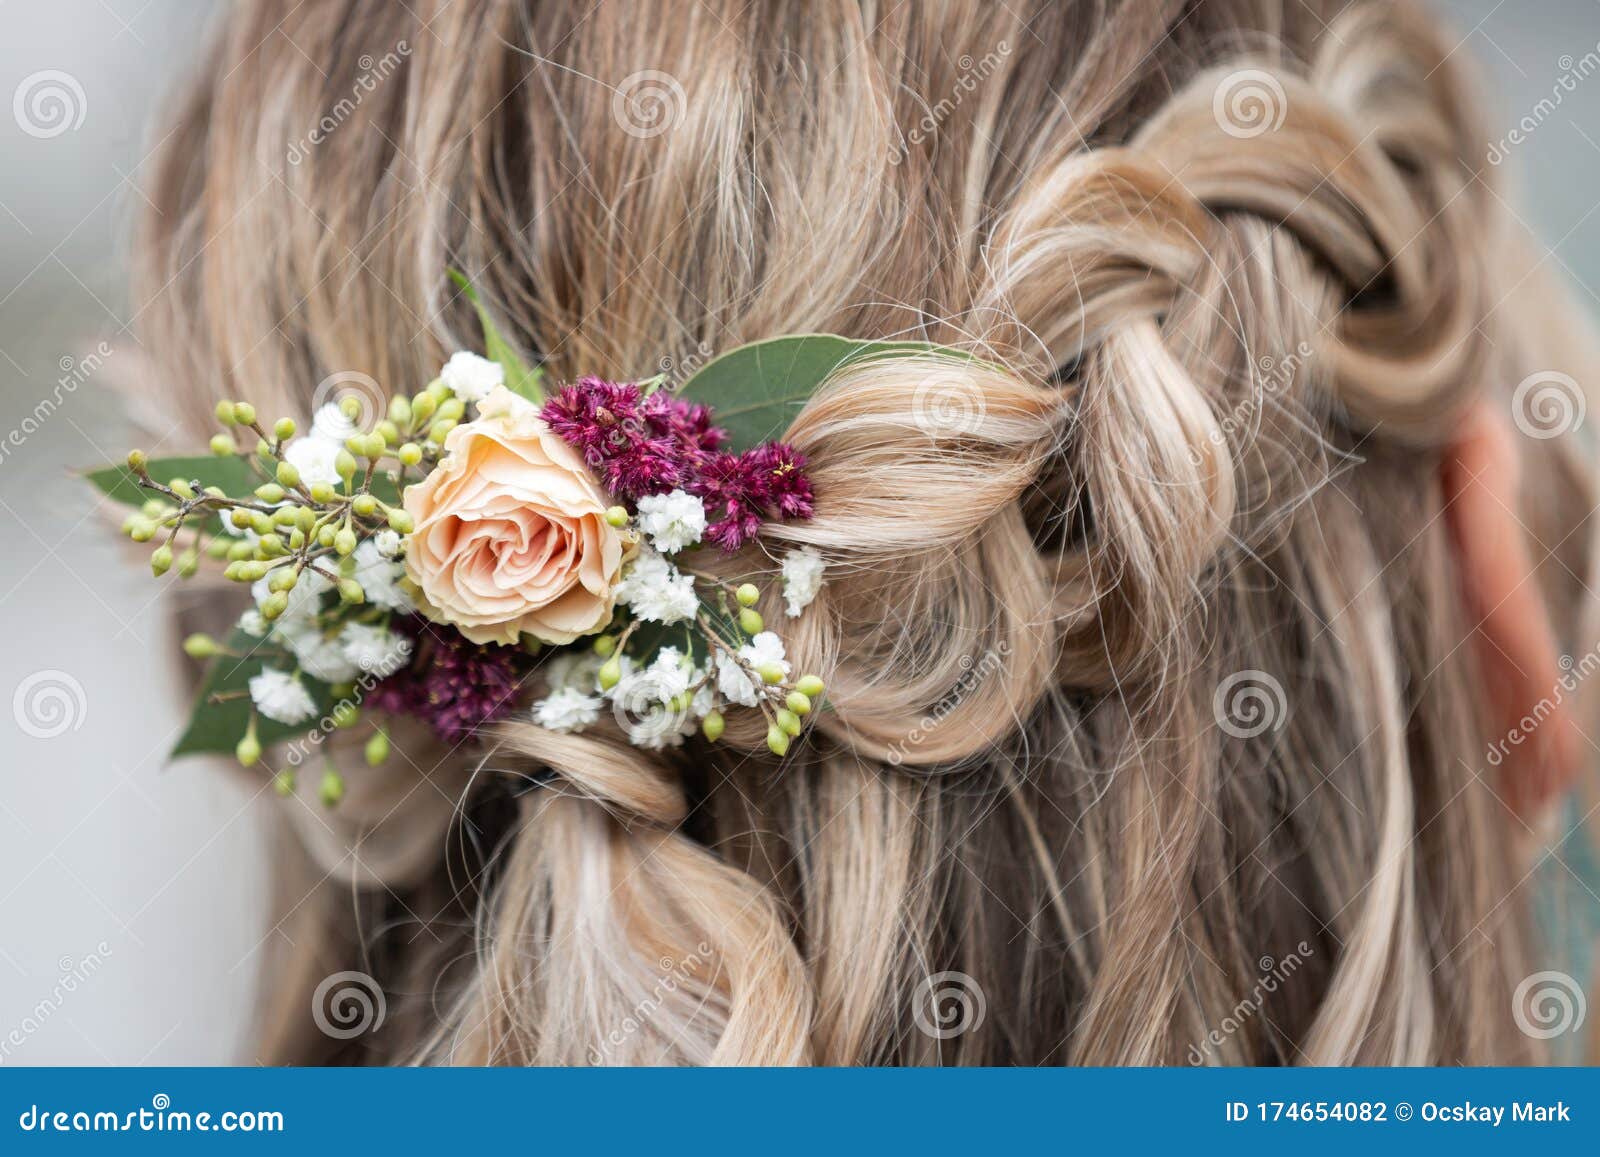 20 Wedding Hair Ideas with Flowers